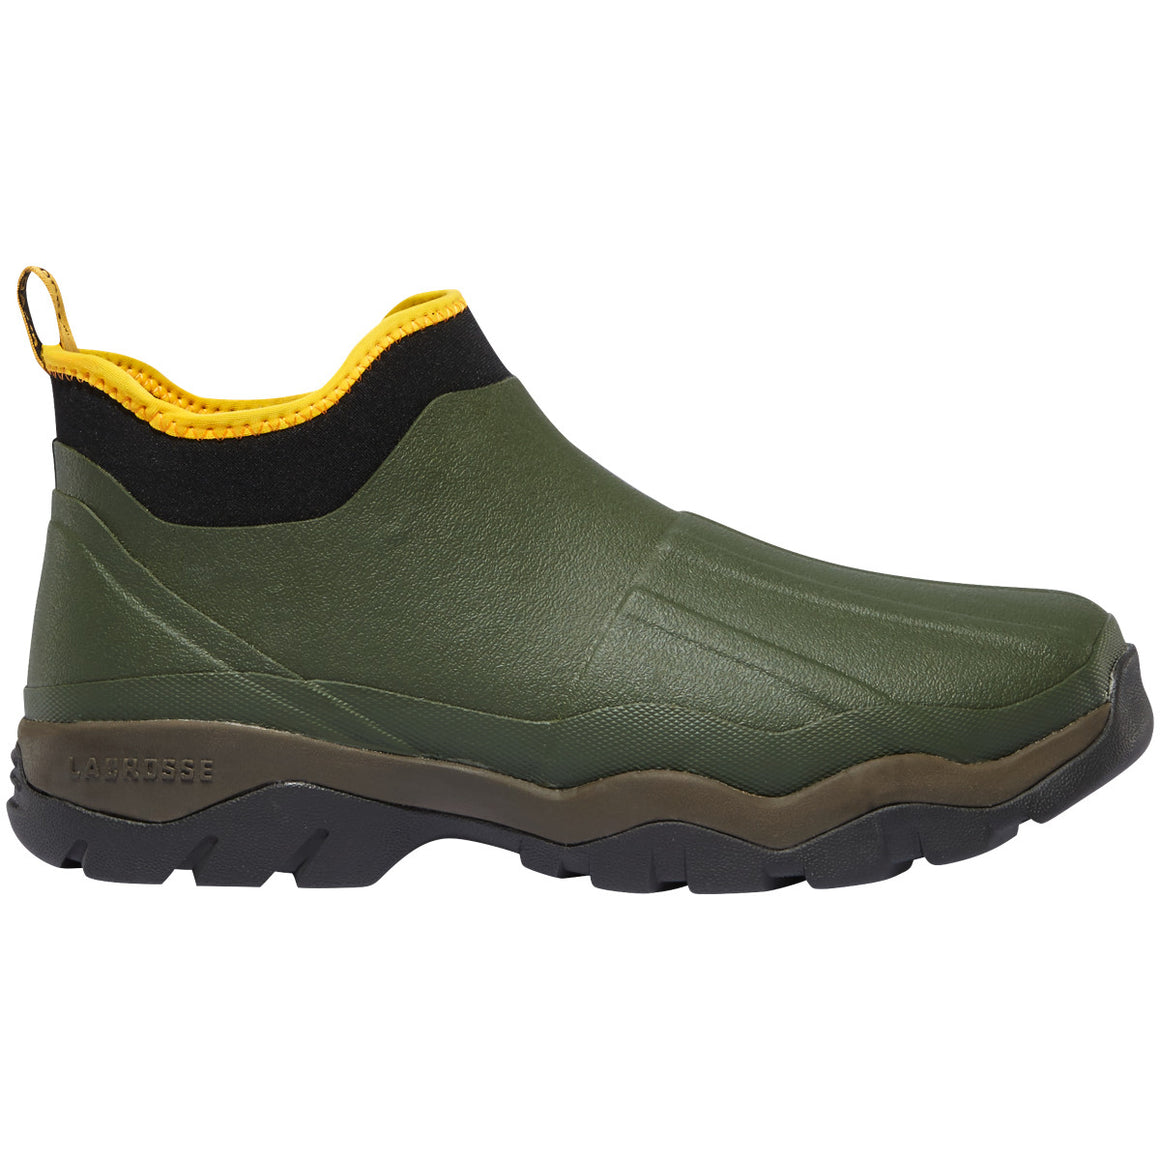 LaCrosse Men's 4.5" Alpha Muddy Outdoor Shoe - Green 612440